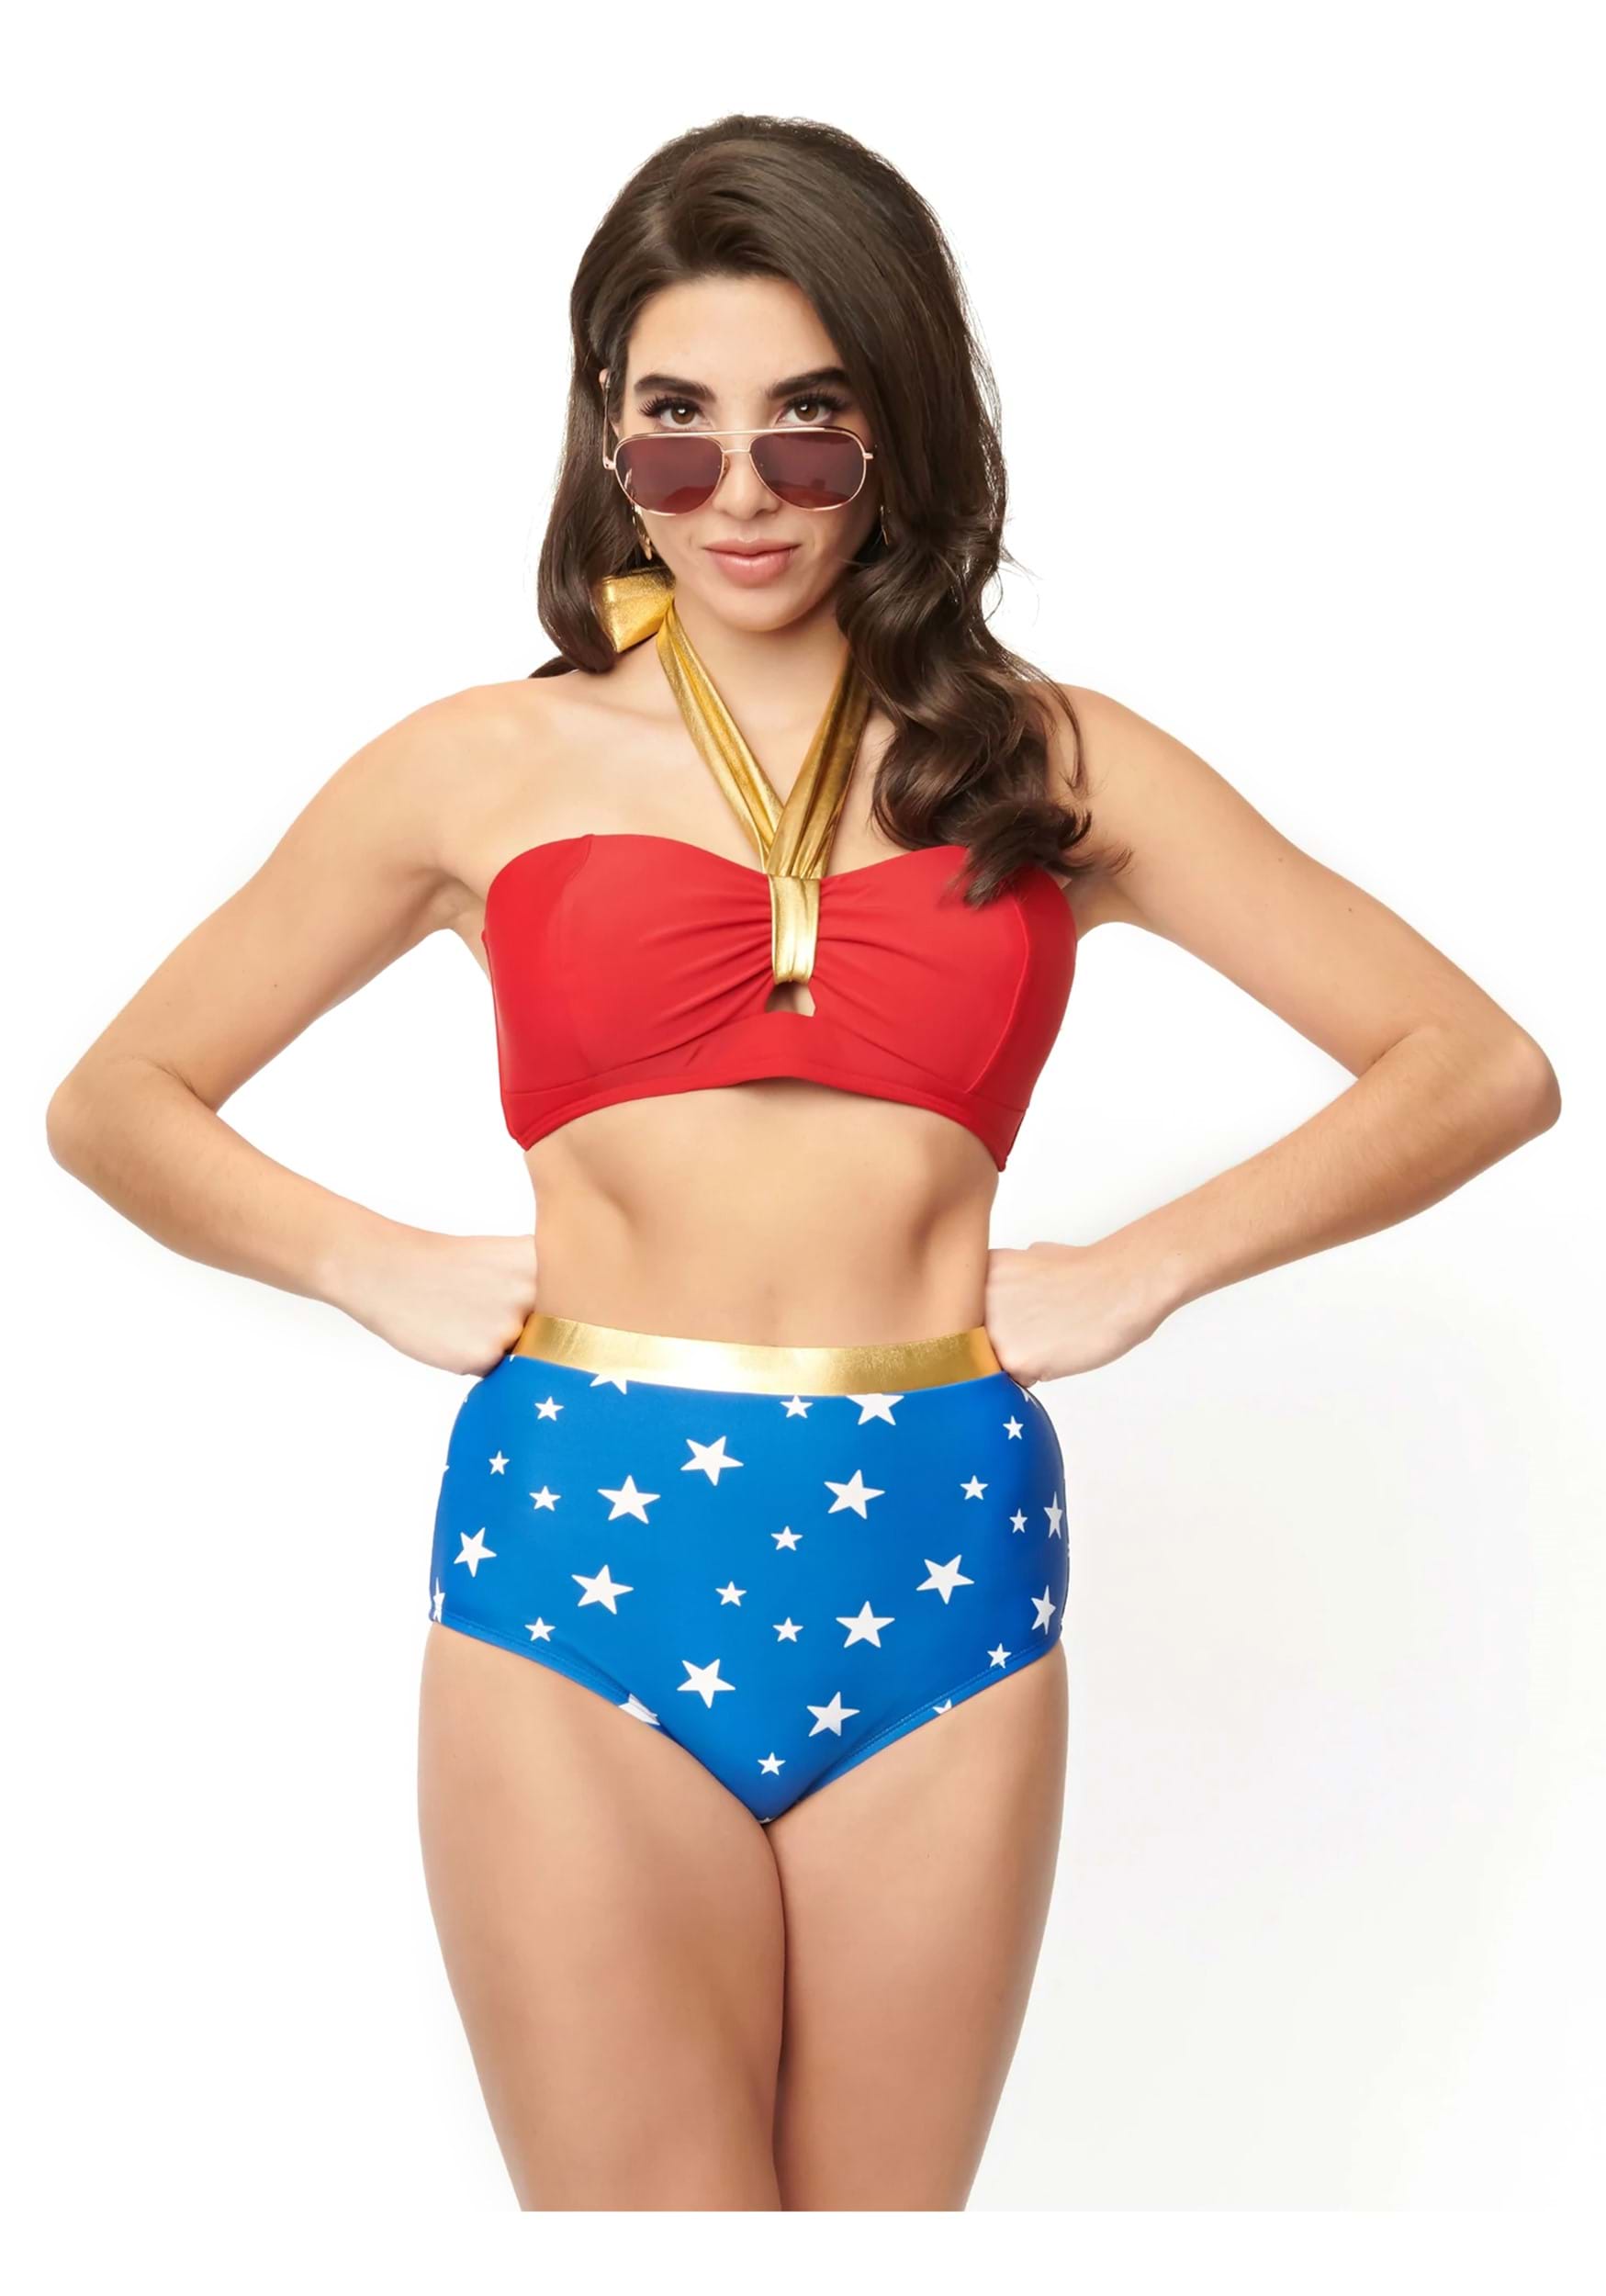 Wonder Woman in a blue bikini - OpenDream